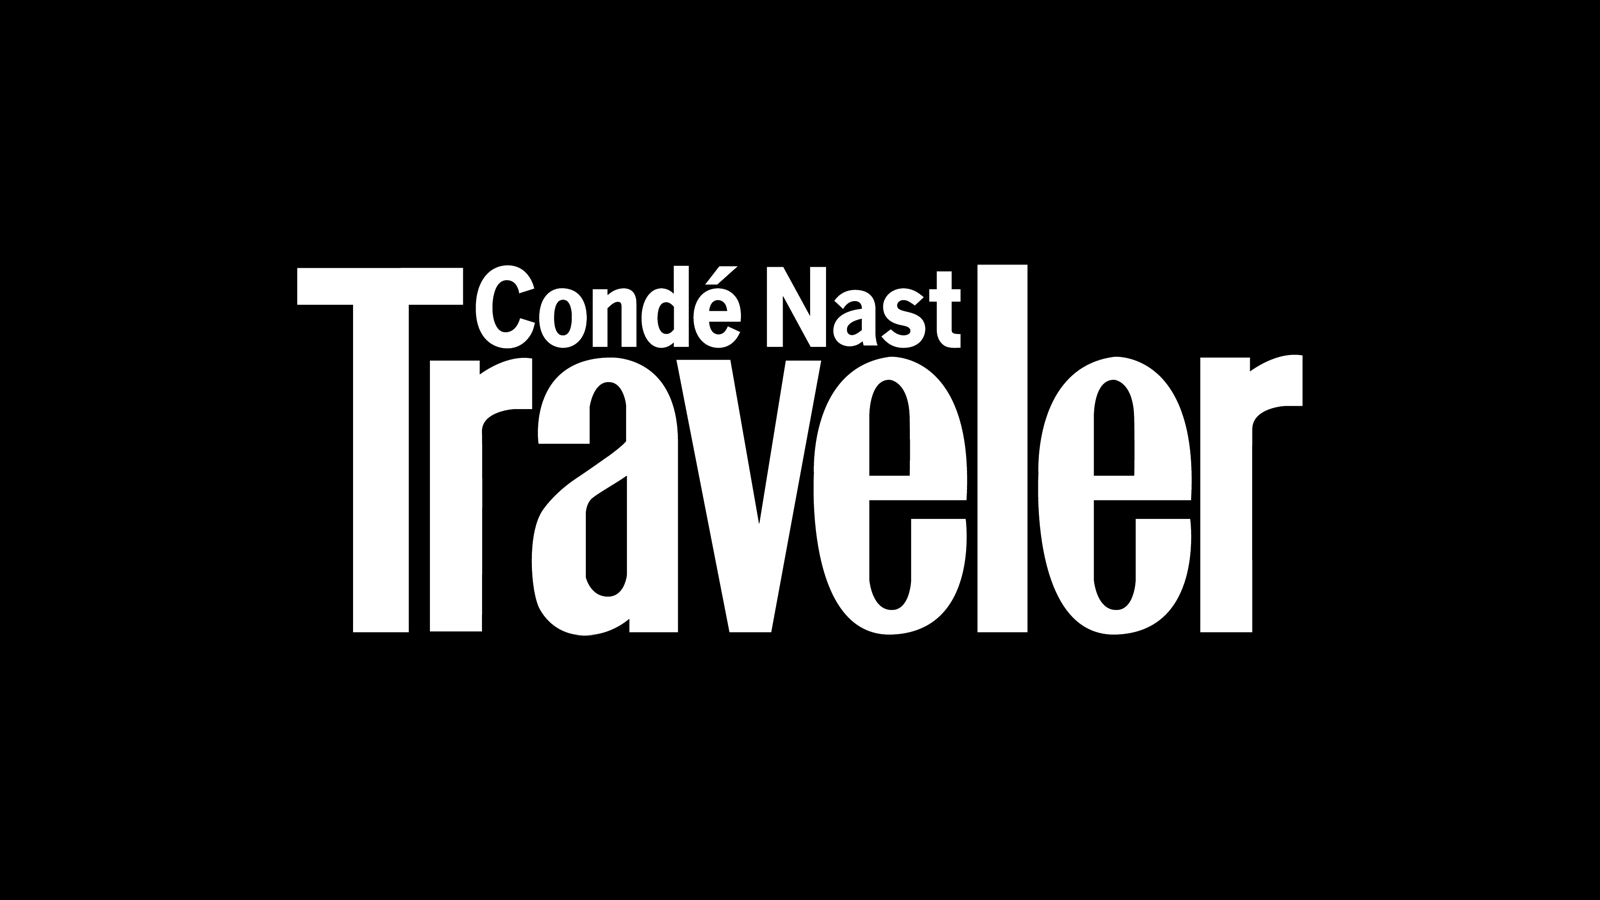 Conde Nast Traveller Logo